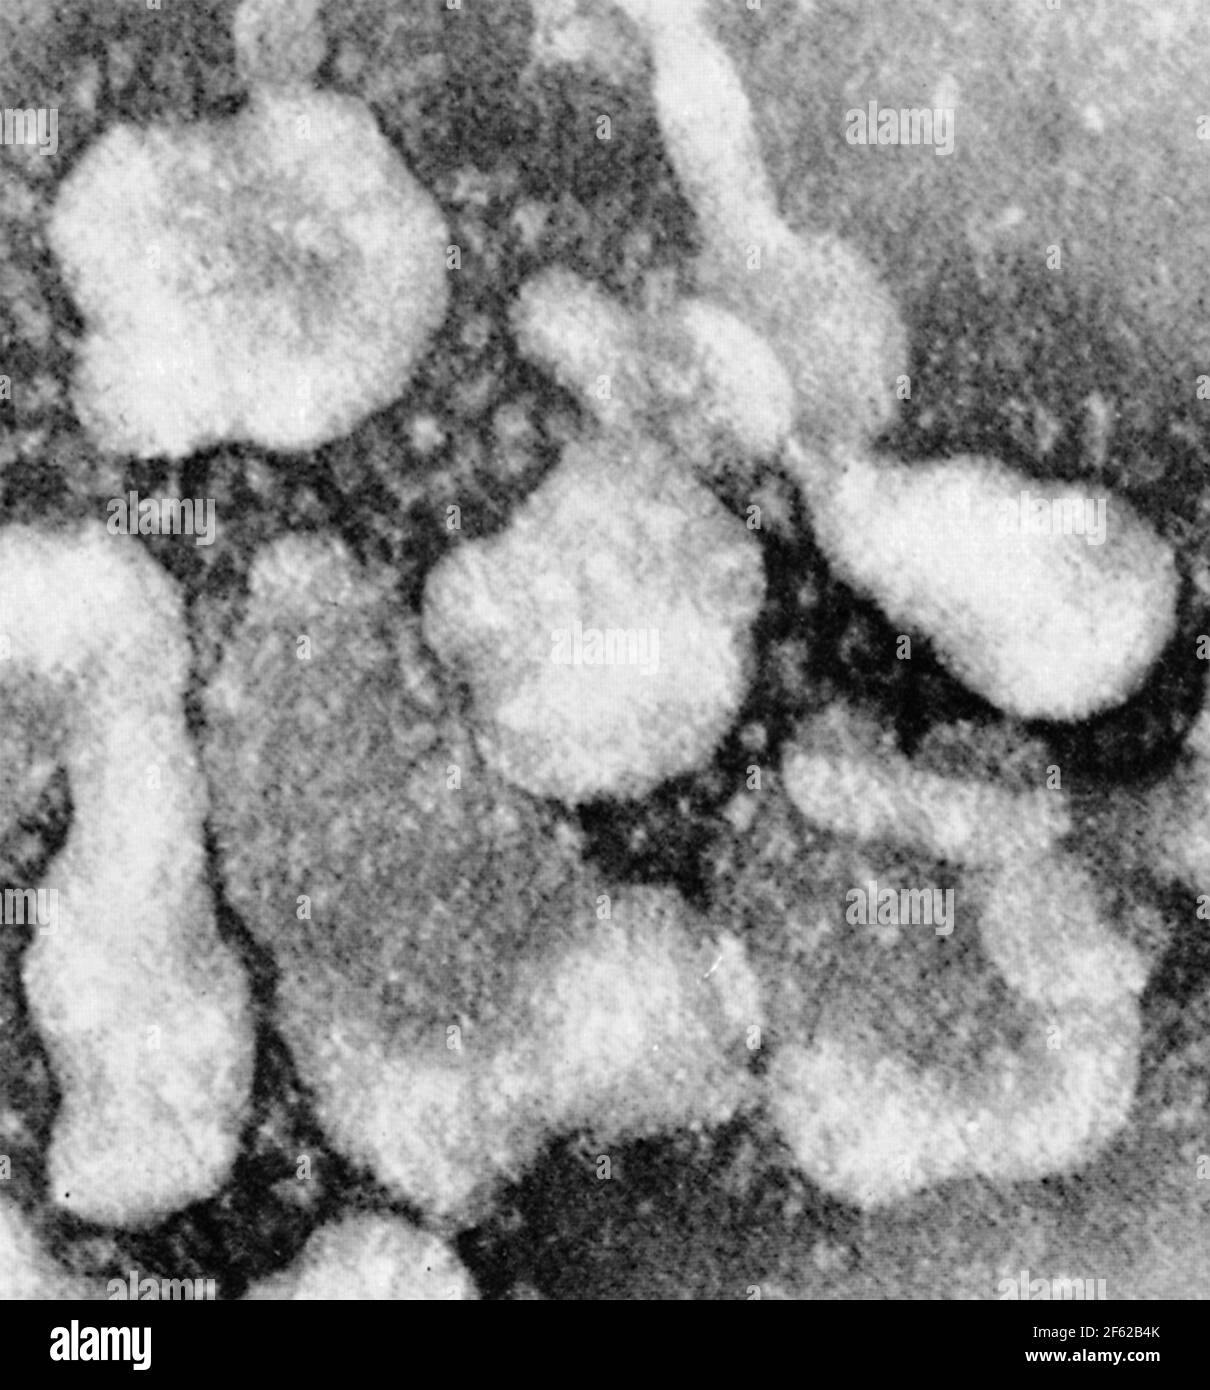 Micrograph of Coronavirus by June Almeida, 1966 Stock Photo